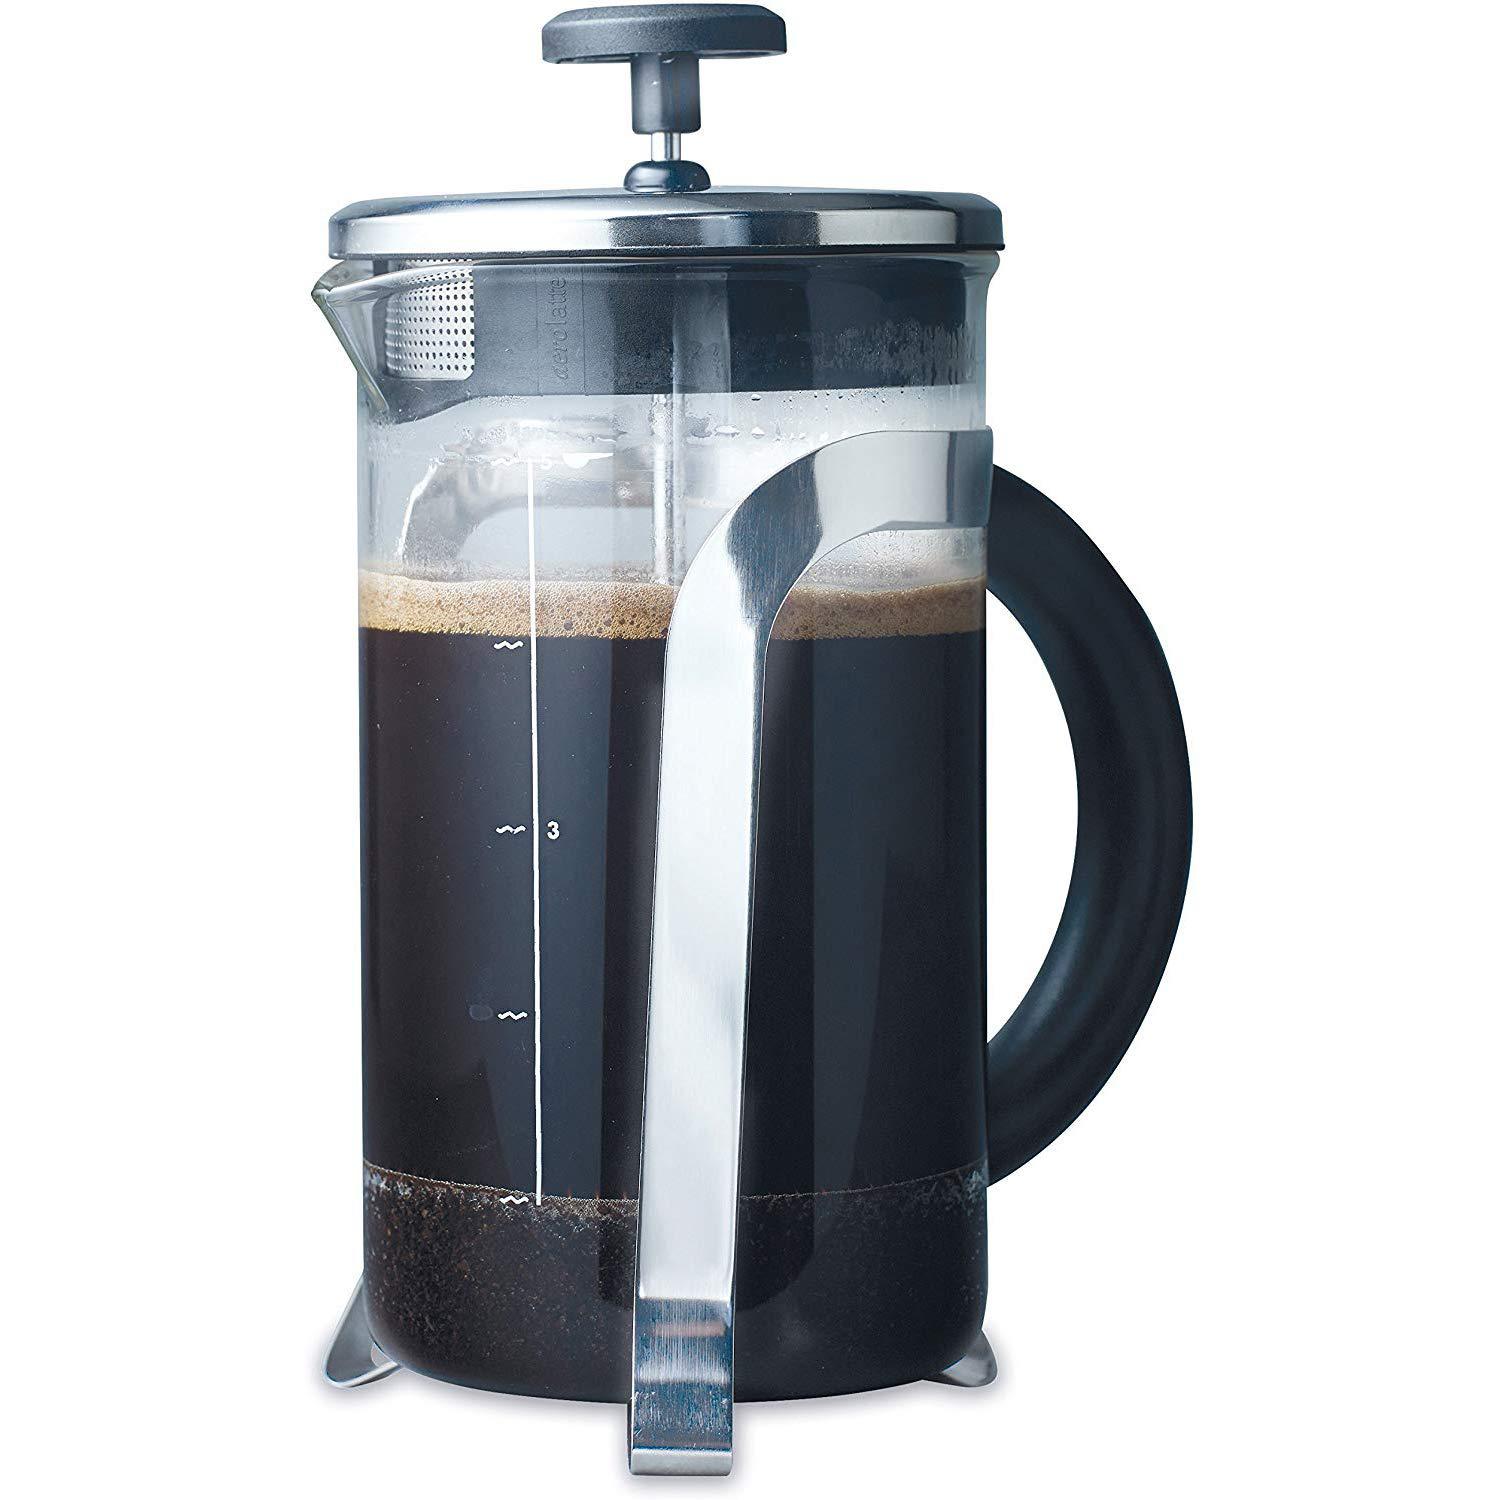 aerolatte french press coffee maker, brews 5 servings, 20-ounce